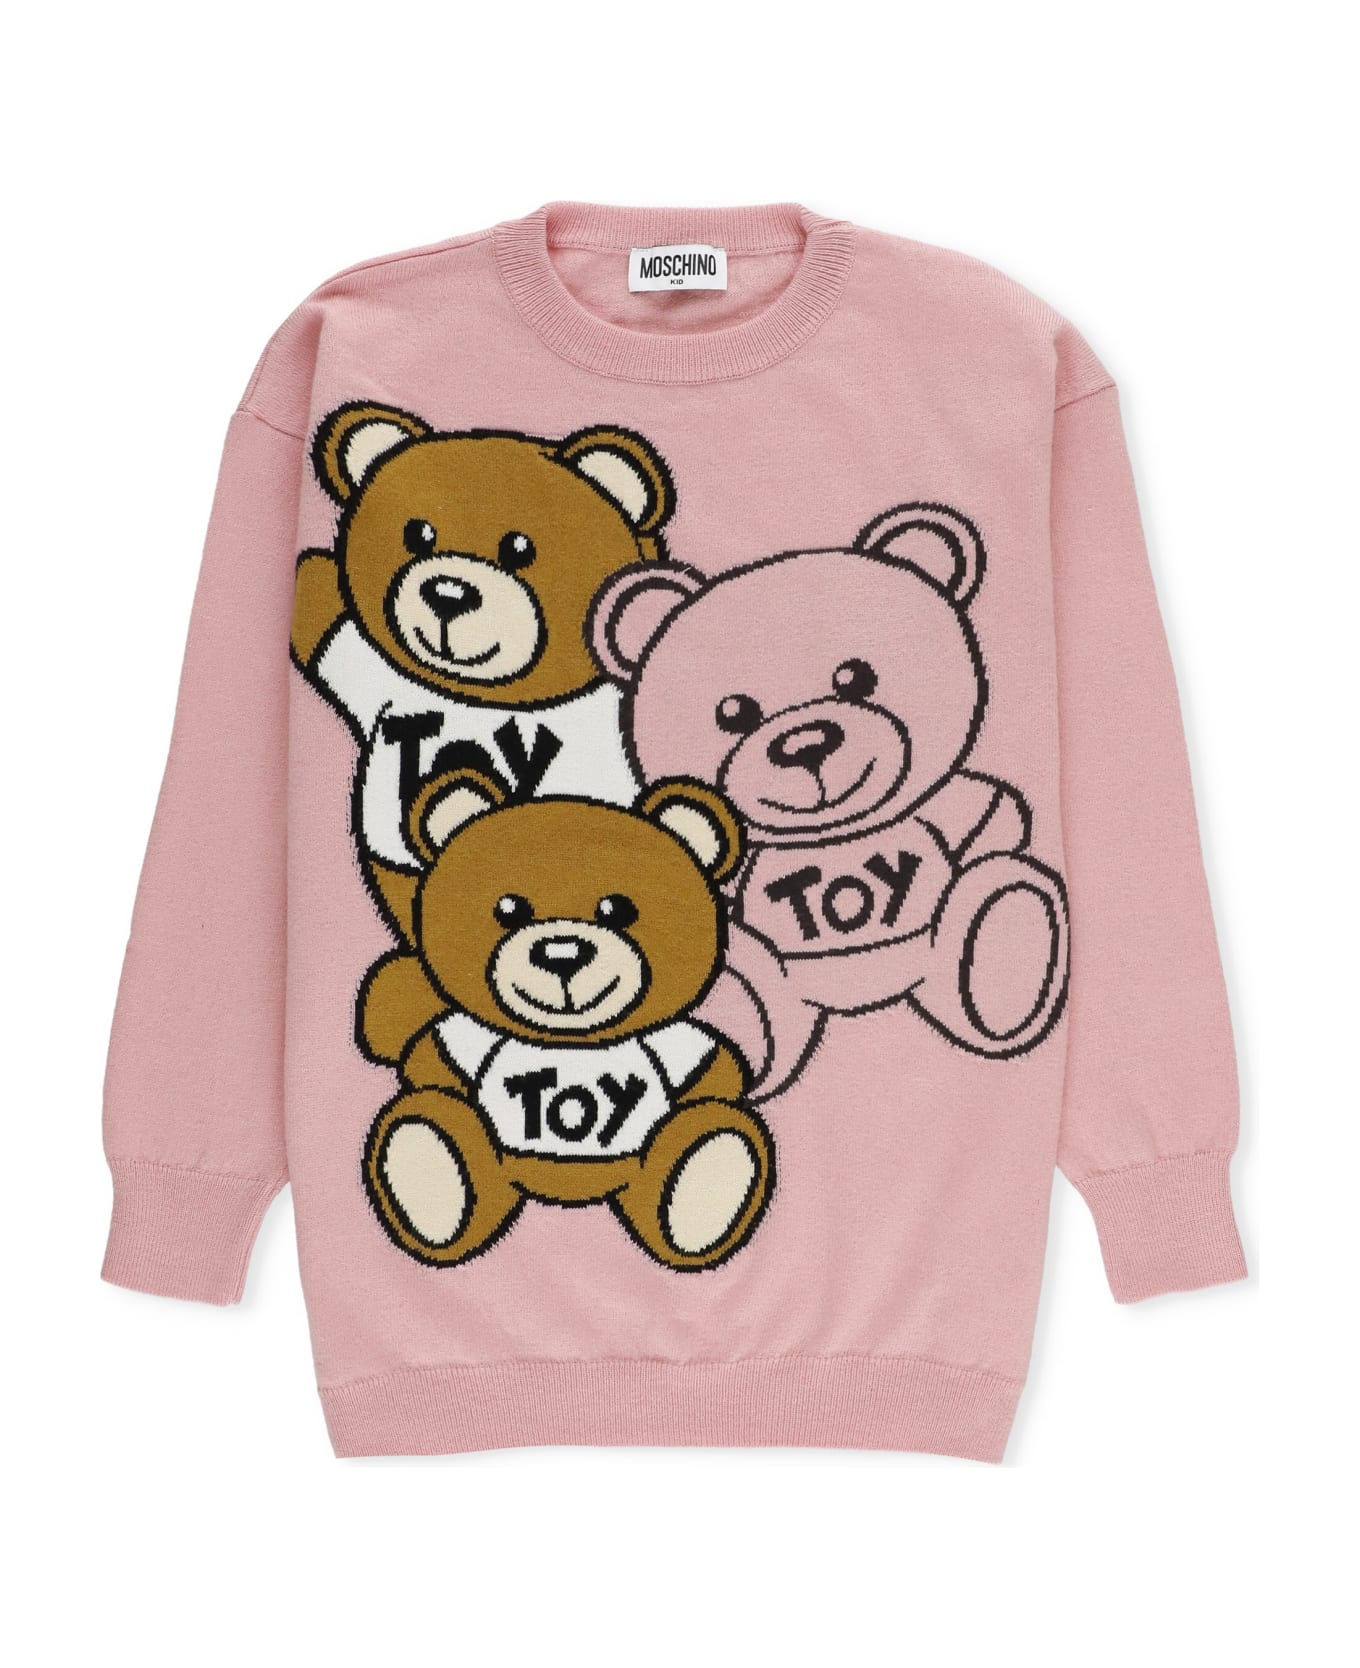 Moschino Teddy Friends Sweater - Sugar Rose